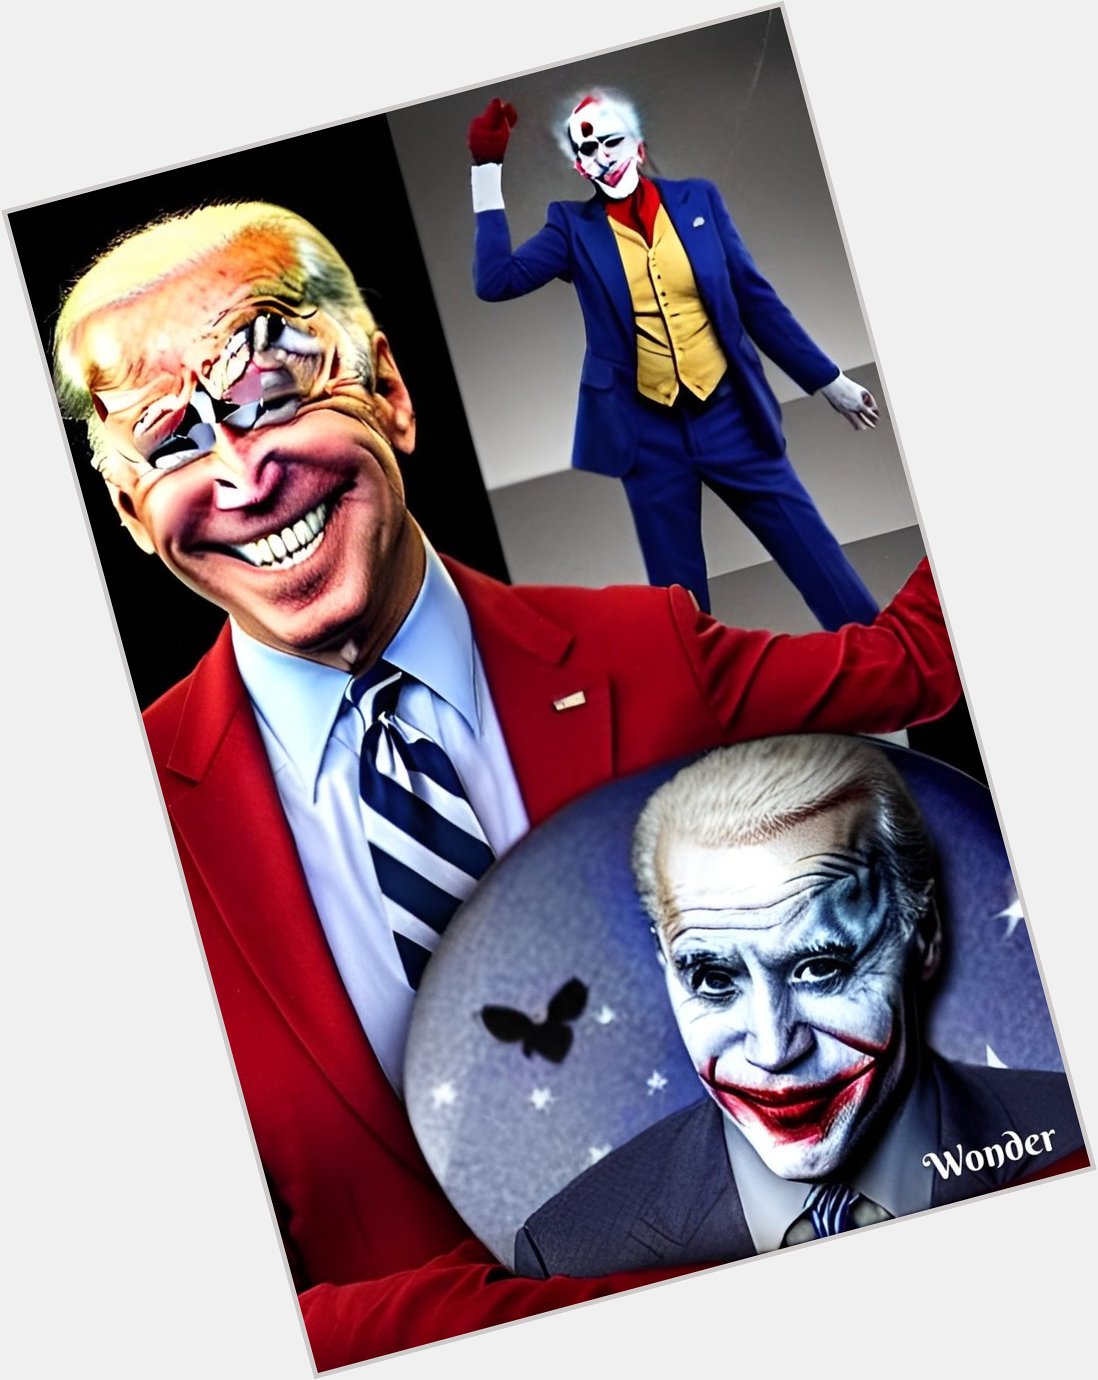  Happy birthday man, here is an AI generated image of Joe Biden as the Joker 